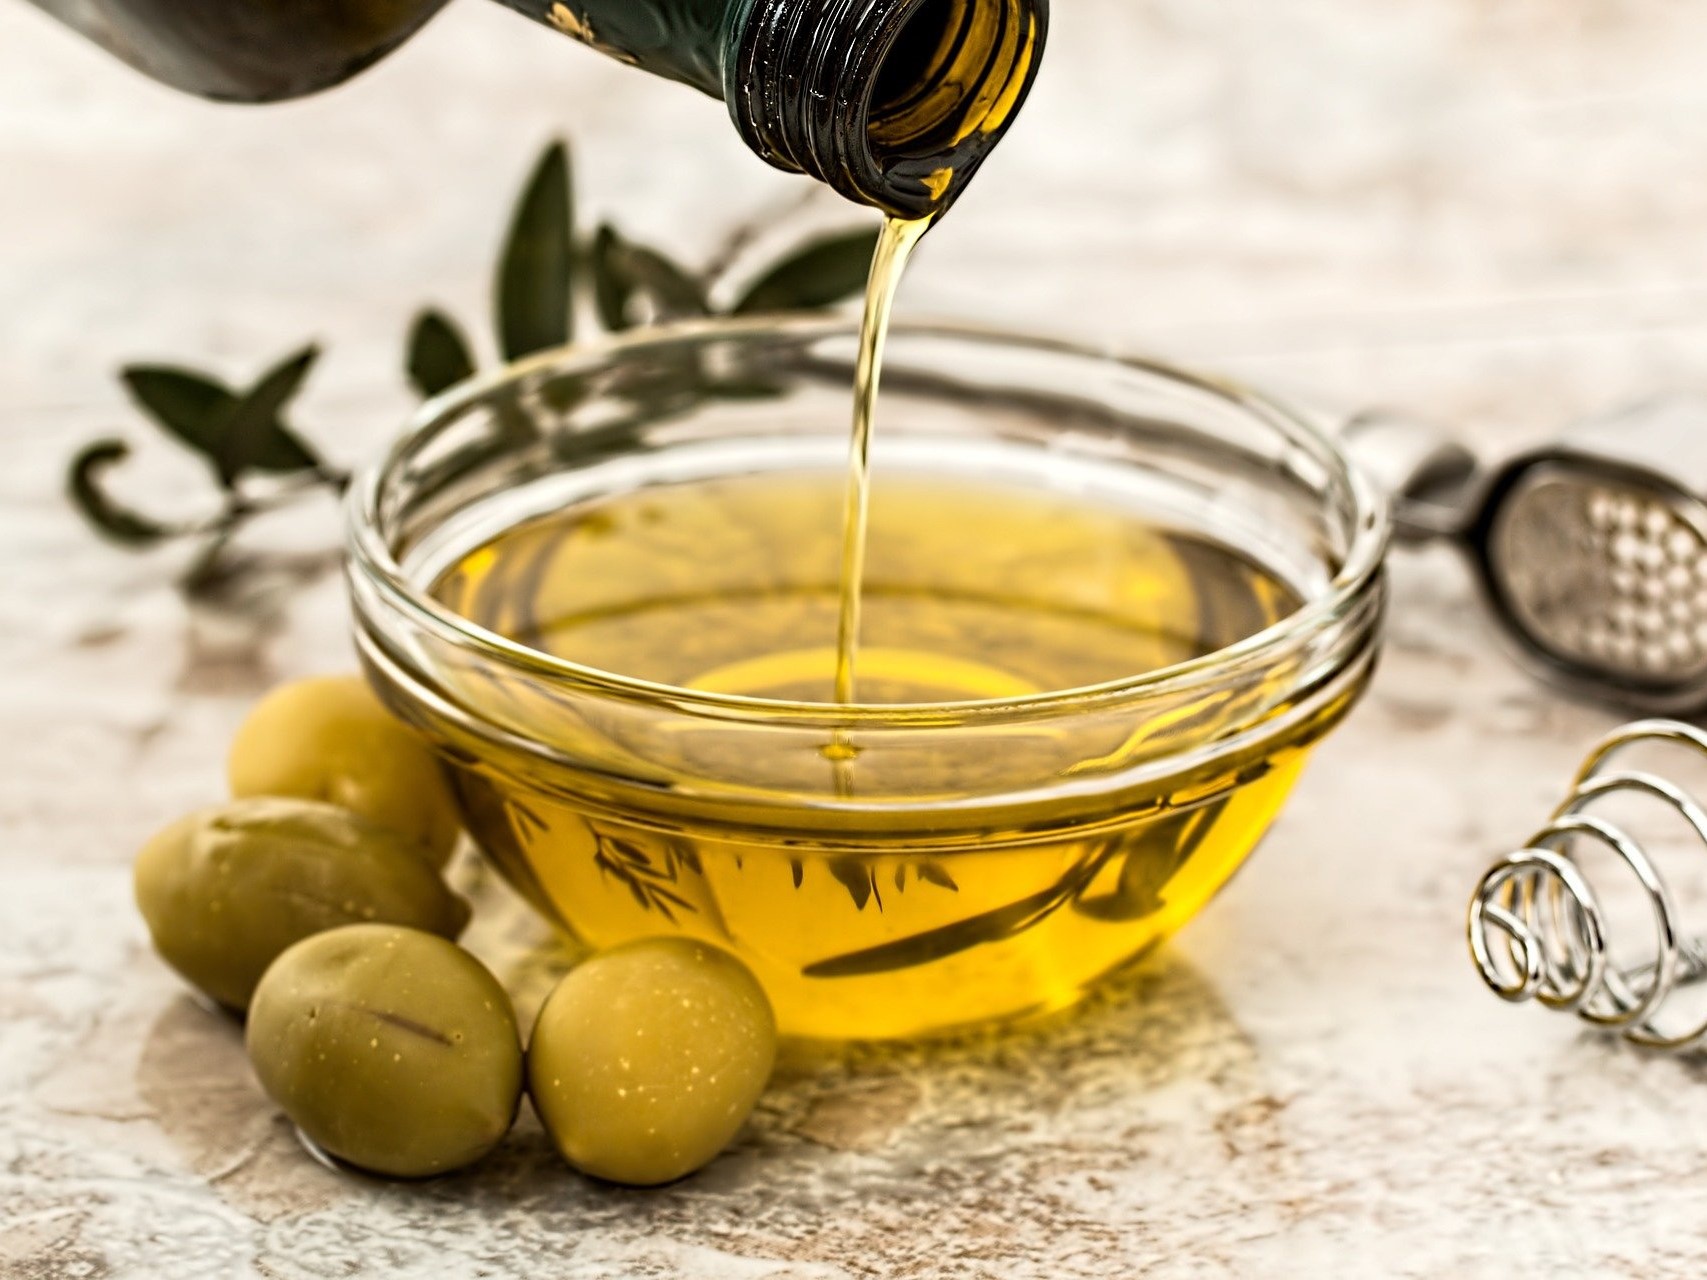 Olivenöl enthält viele Polyphenole